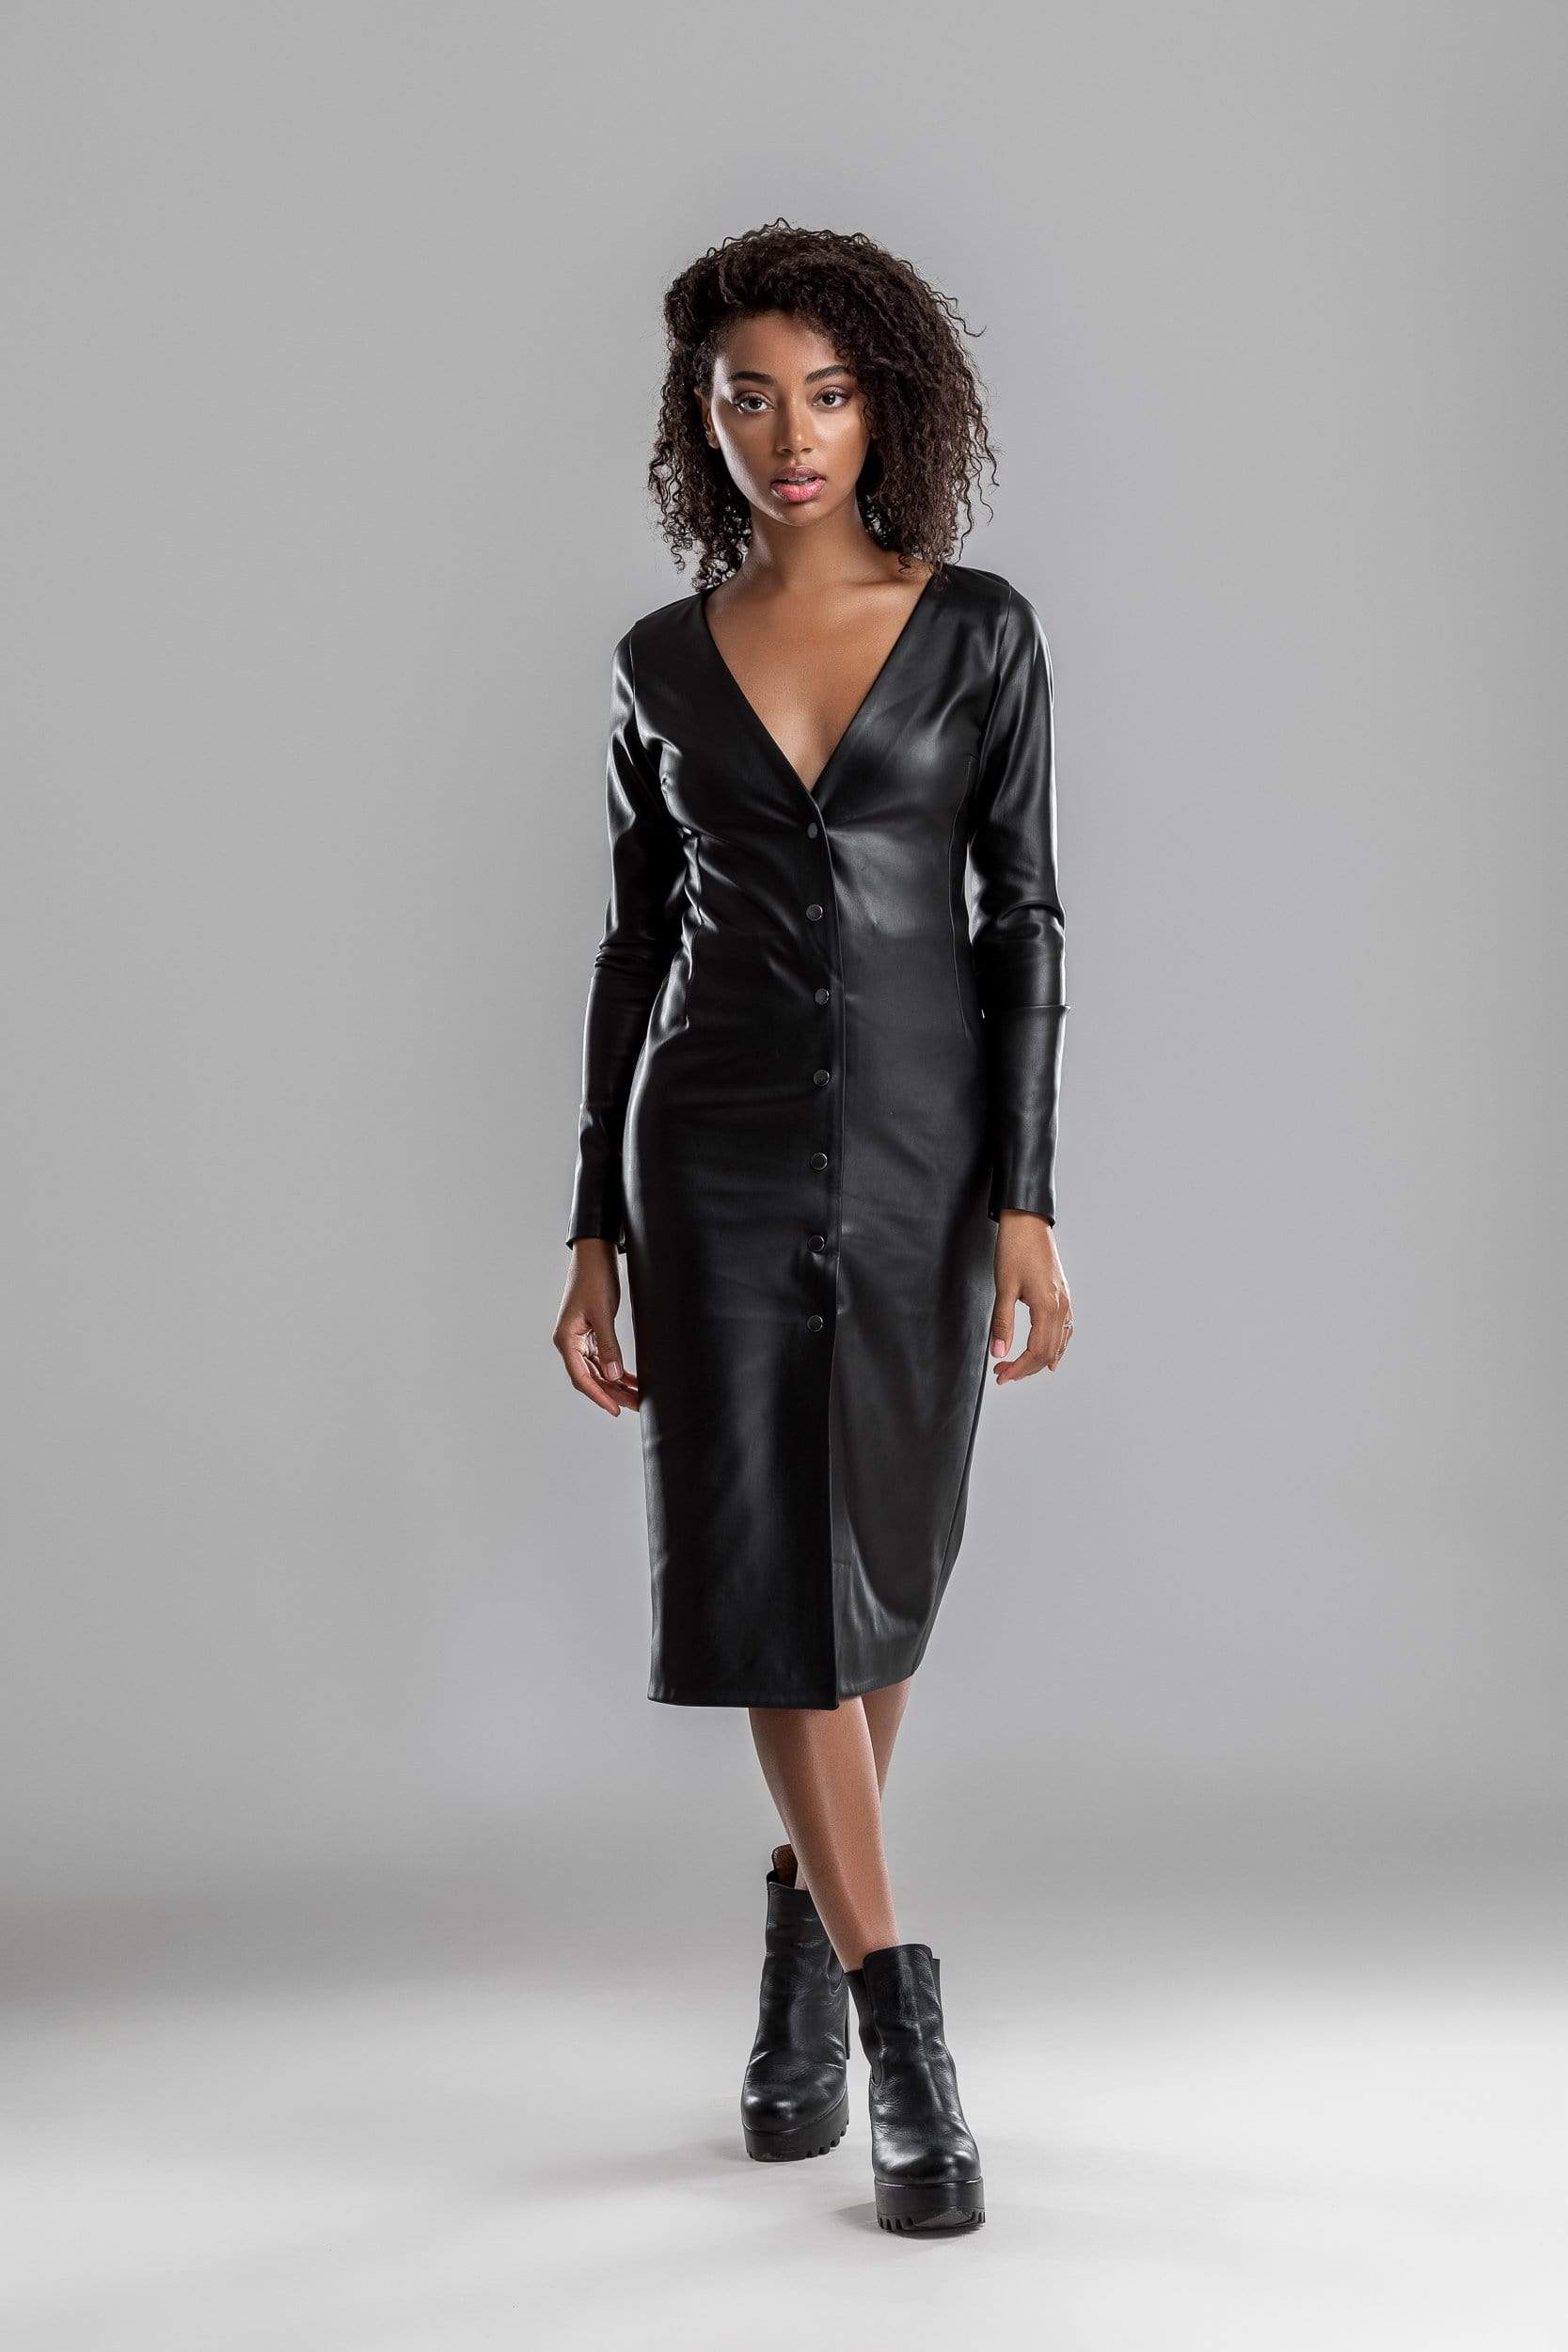 MDNT45 Dresses Black leather midi dress